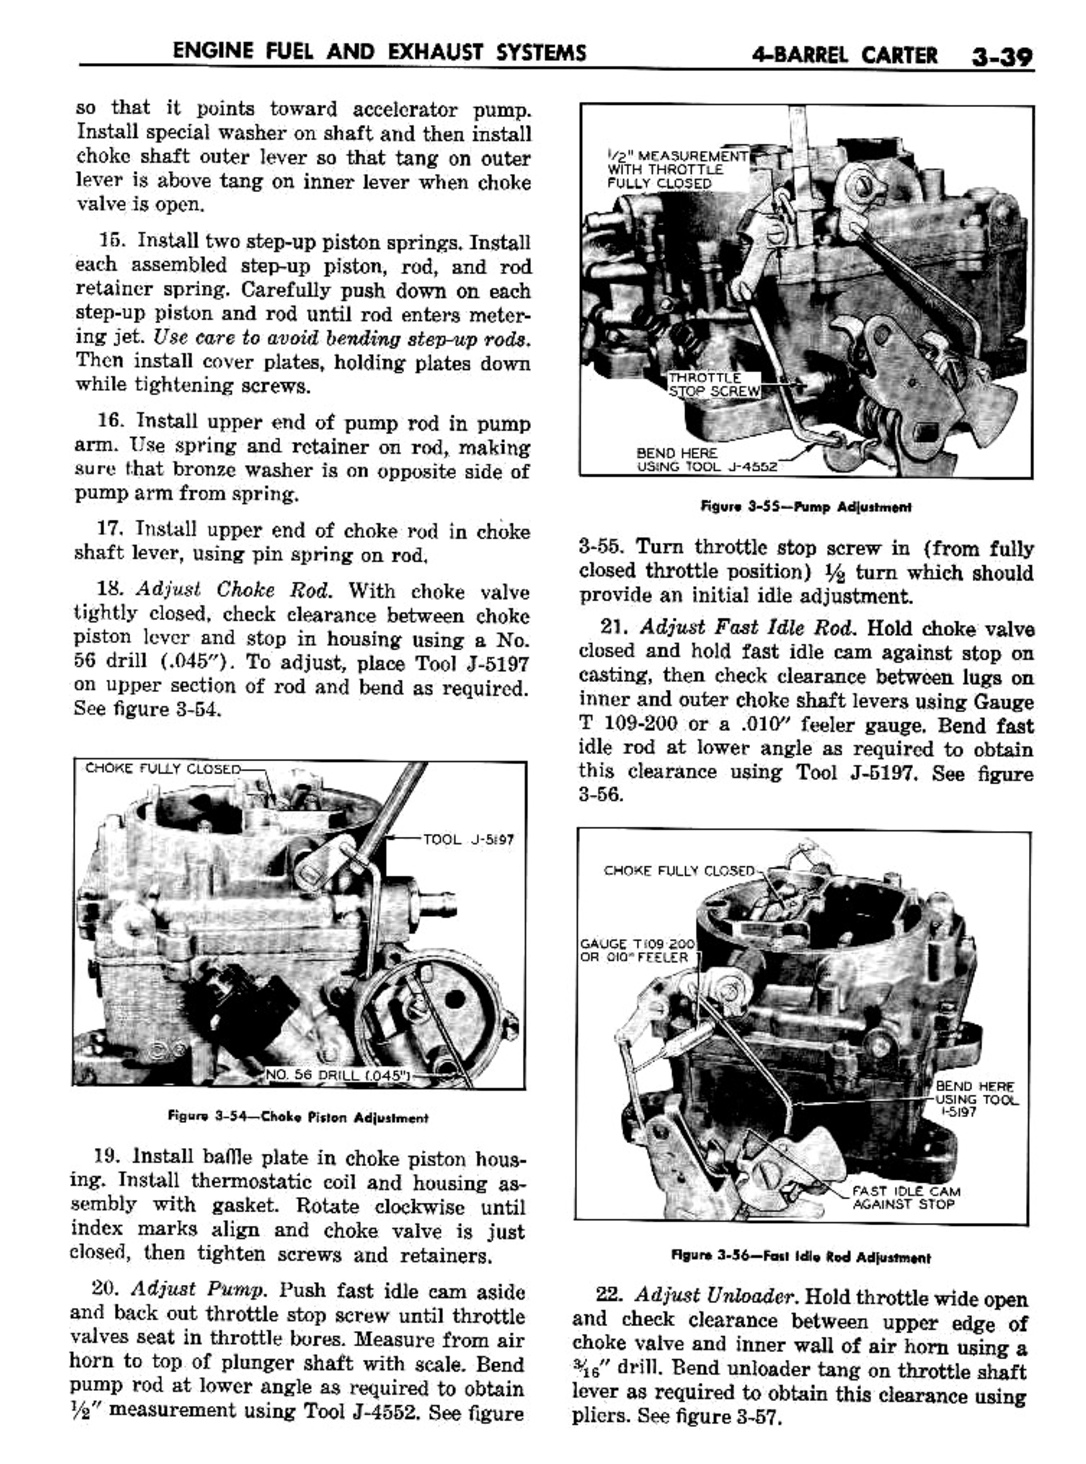 n_04 1957 Buick Shop Manual - Engine Fuel & Exhaust-039-039.jpg